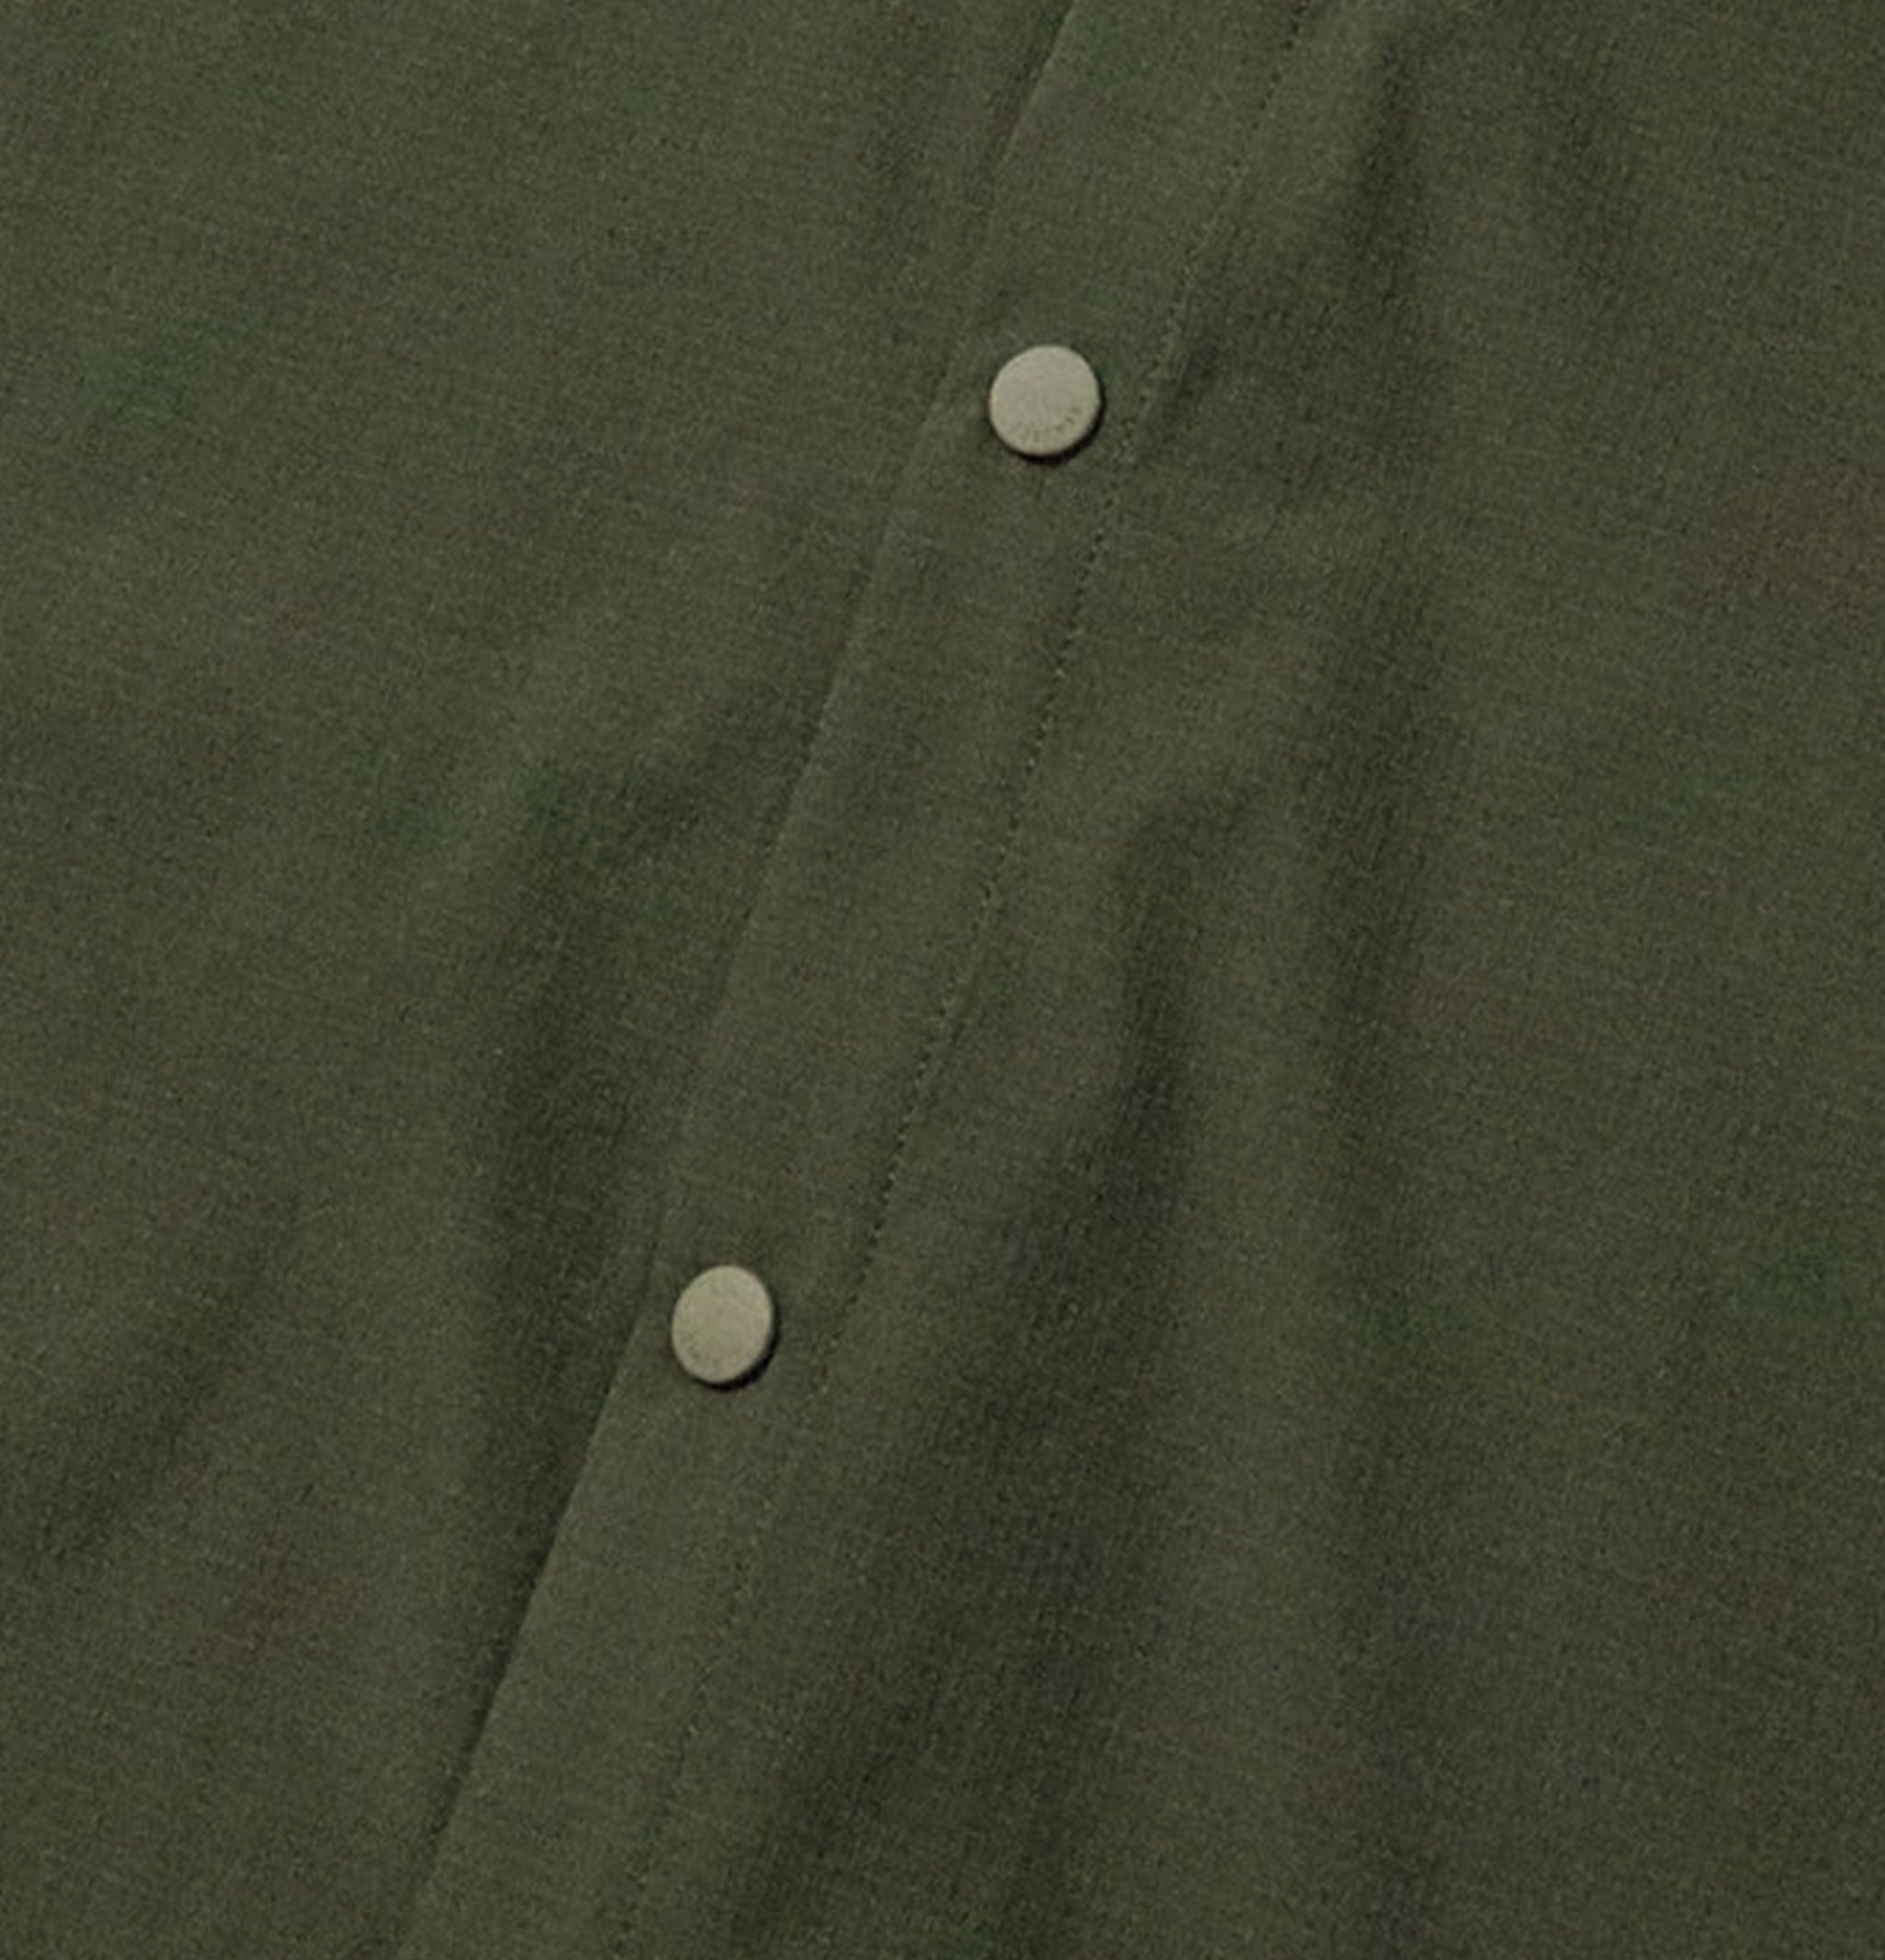 Cookman short-sleeved work shirts - Green